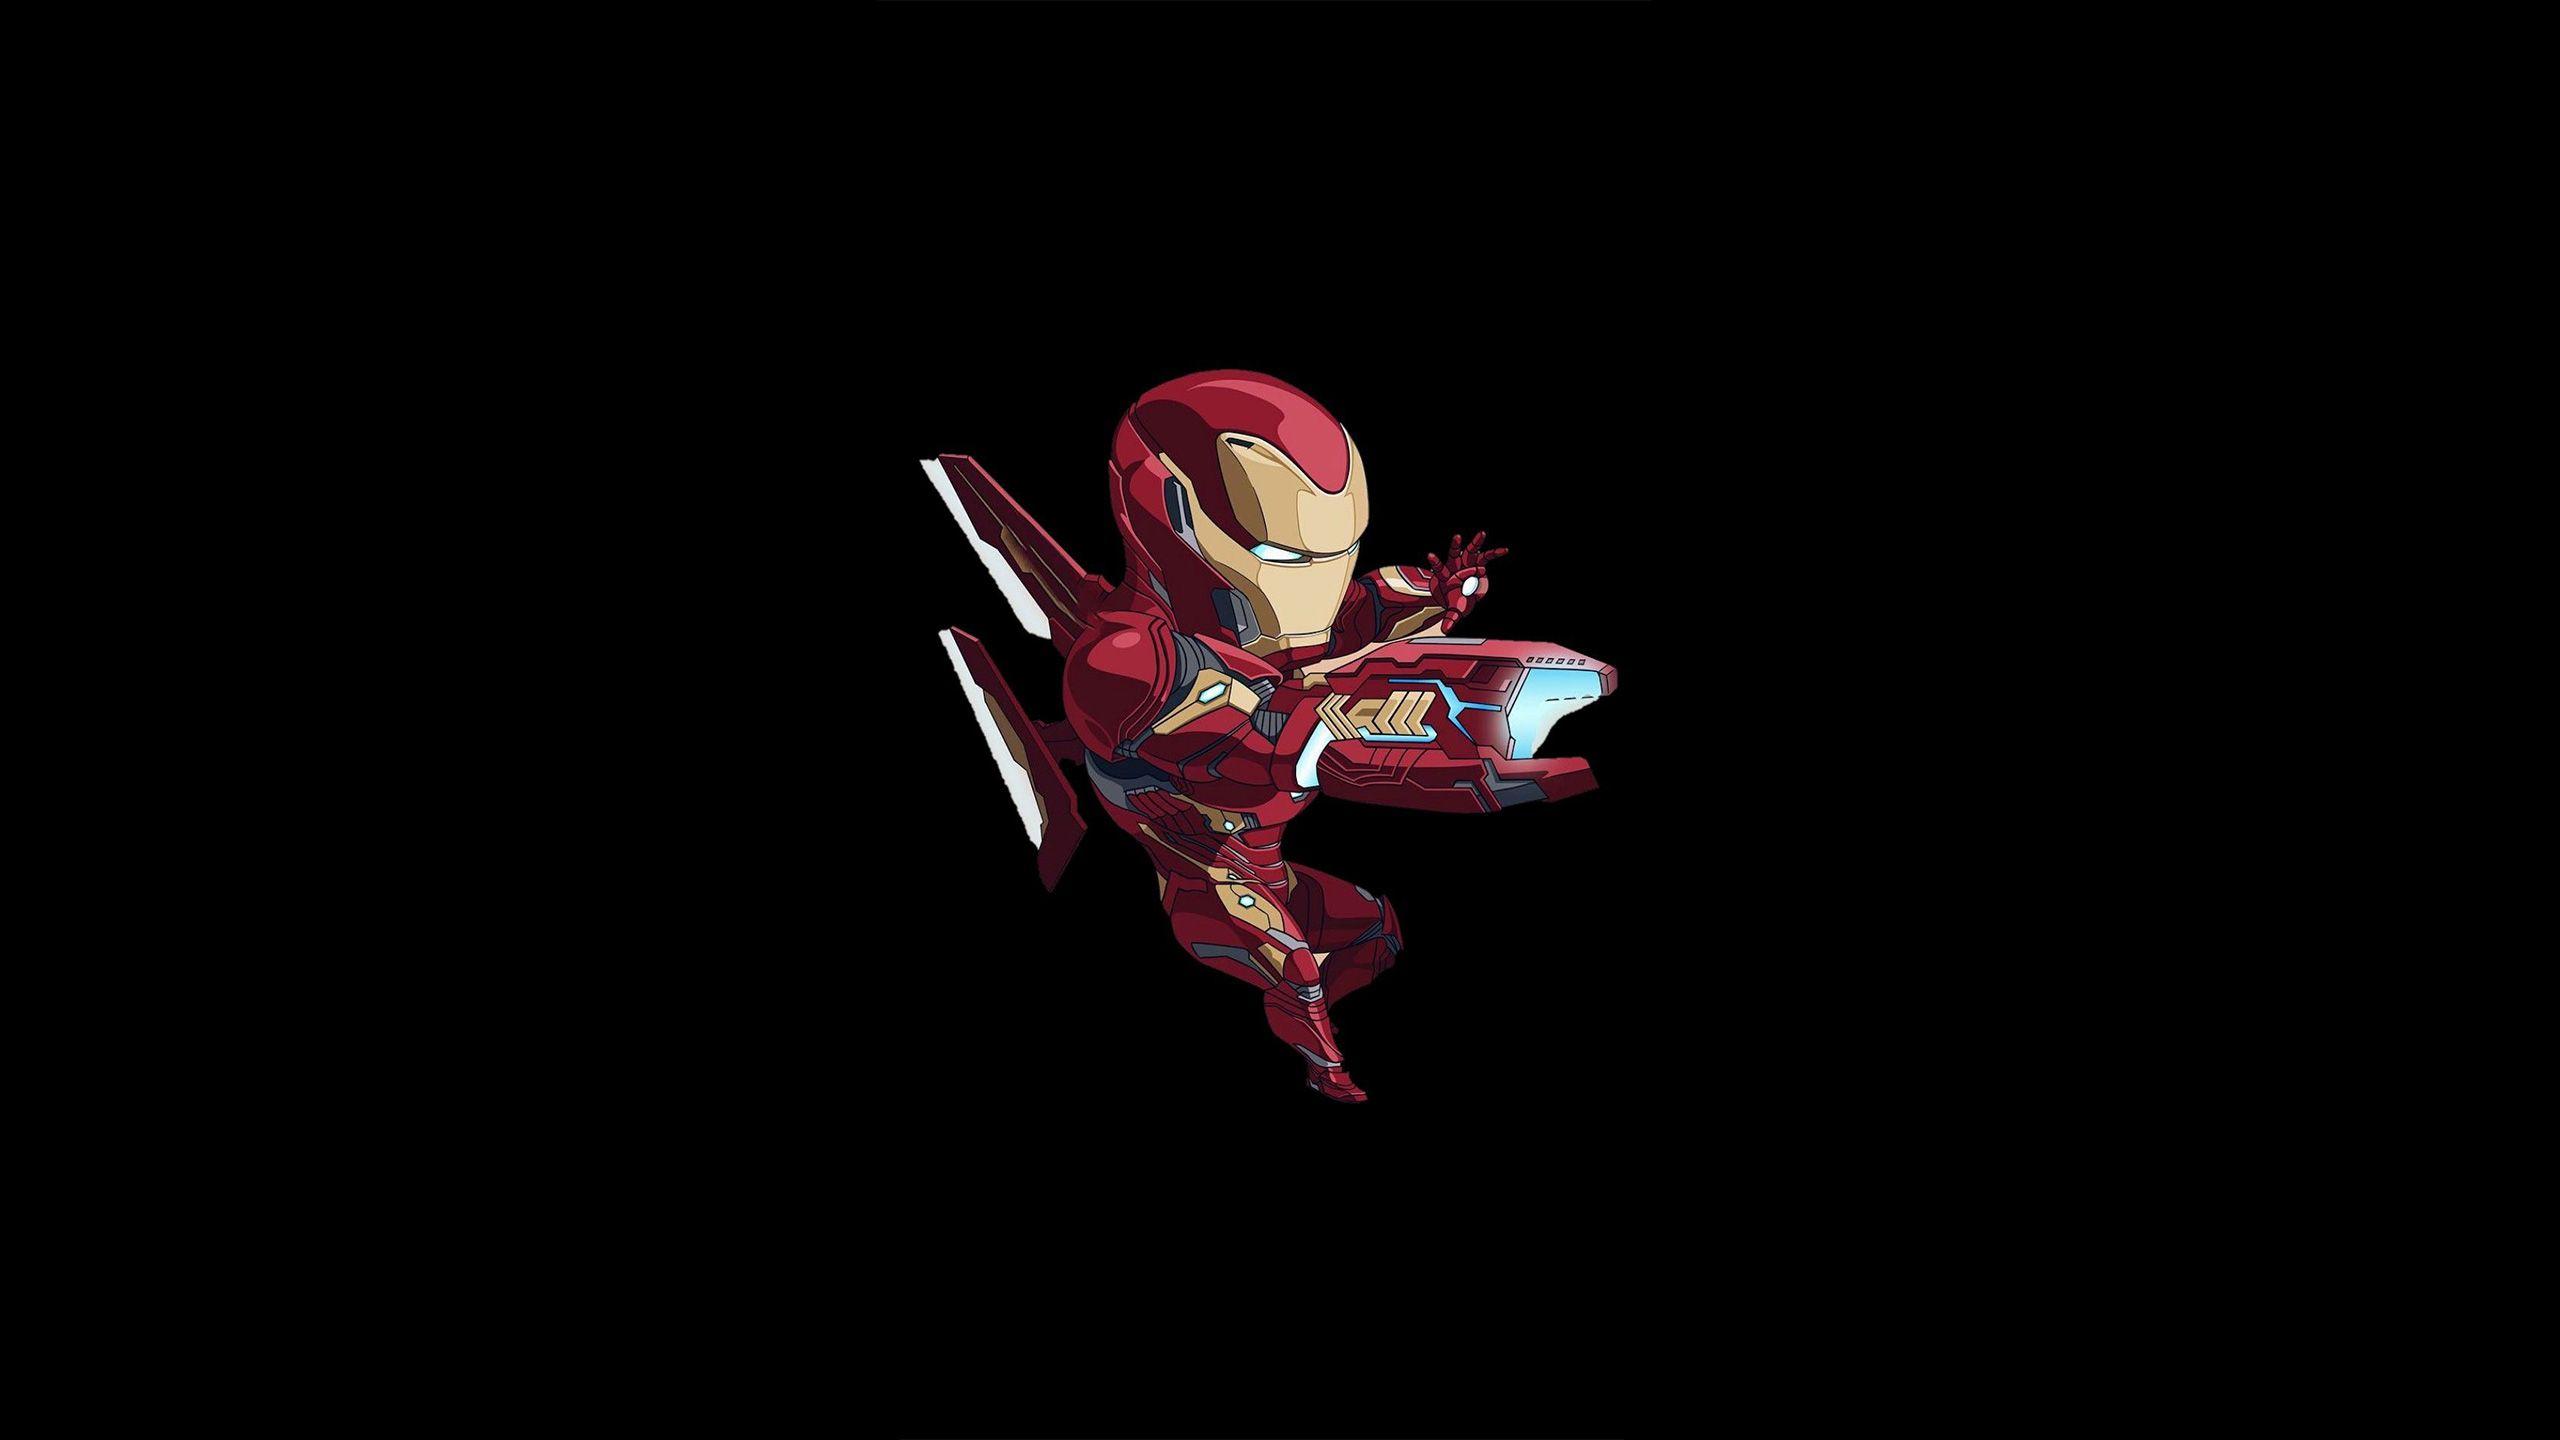 Iron Man Bleeding Edge Armor Artwork, HD Superheroes, 4k Wallpaper